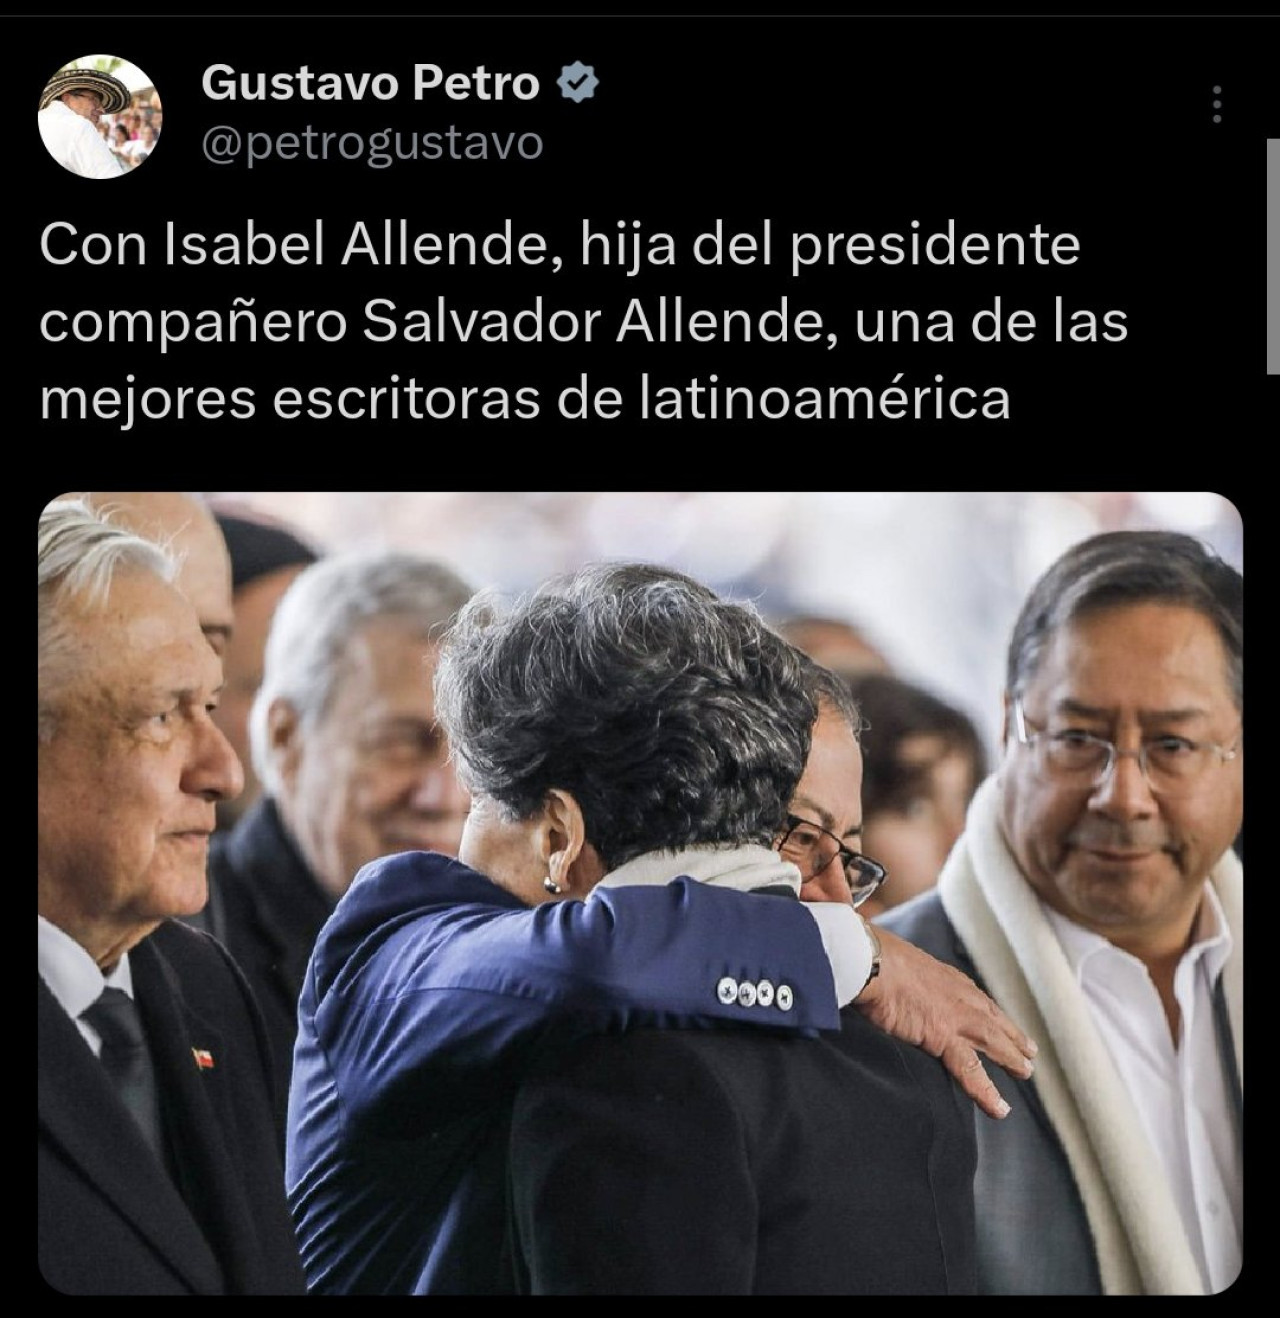 El posteo fallido de Gustavo Petro, presidente de Colombia. Foto: Twitter.